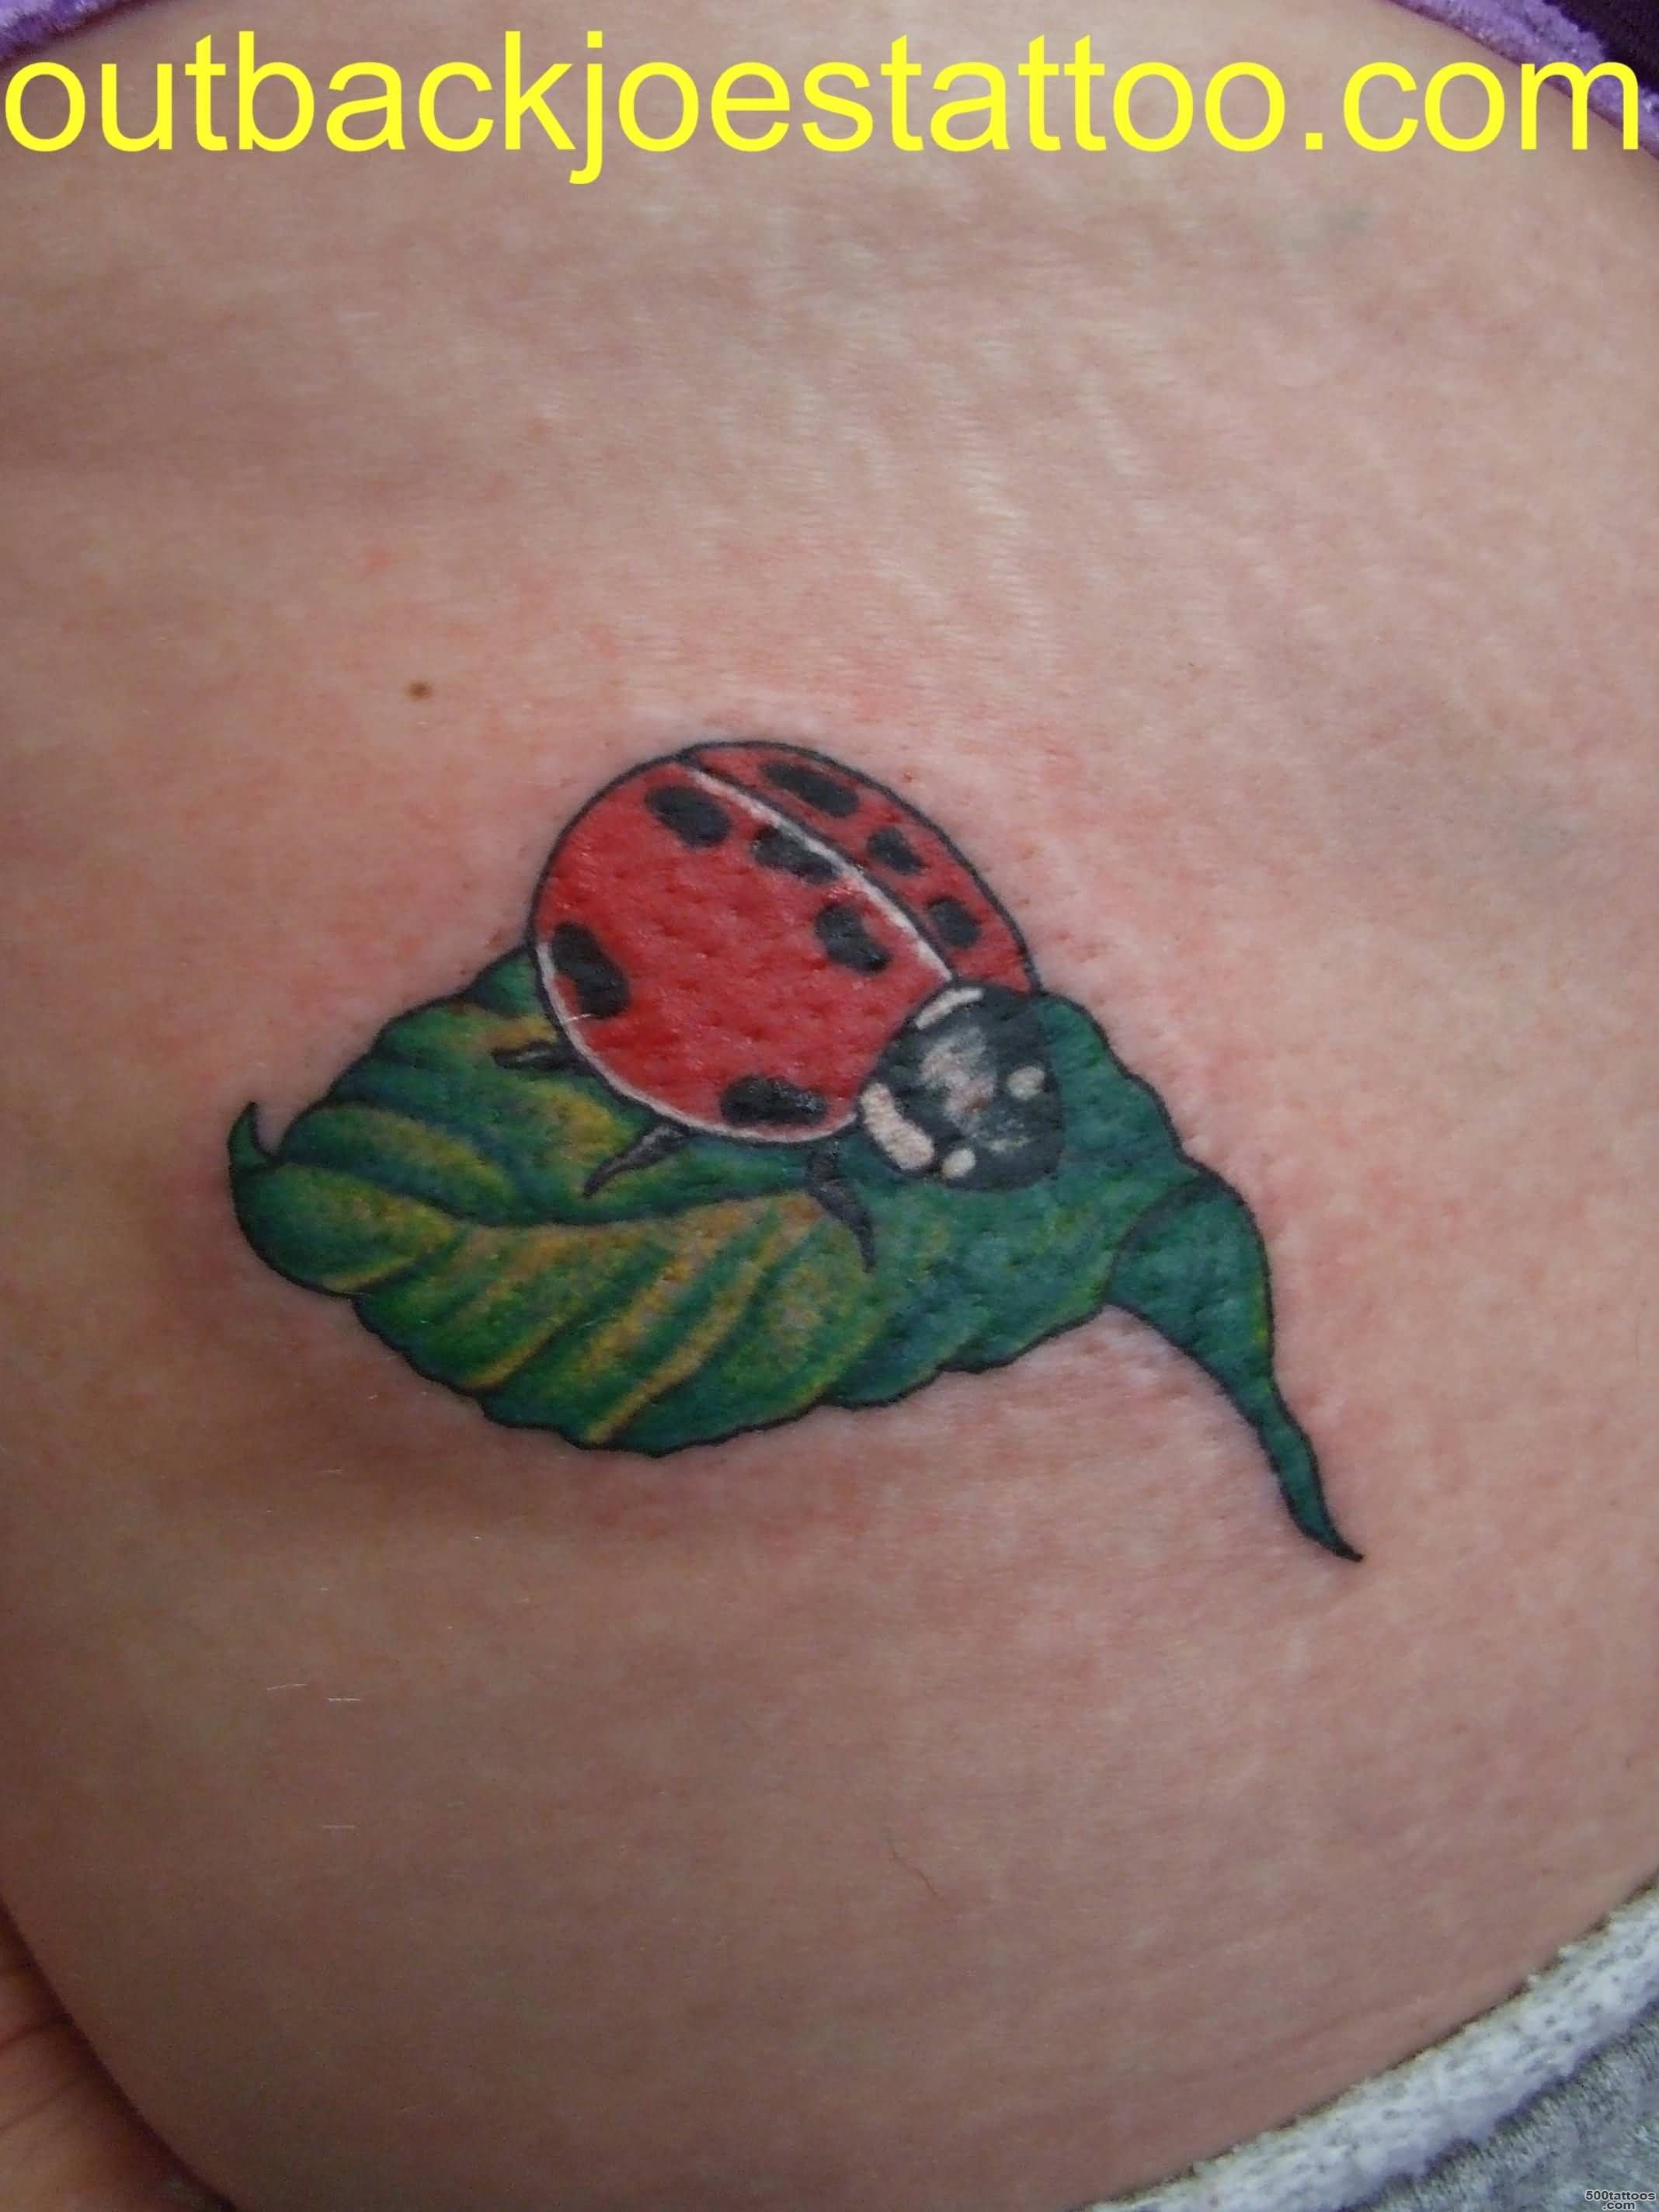 Famous Design On Breast Upper Ladybug Tattoo  Tattooshunter.com_46.JPG